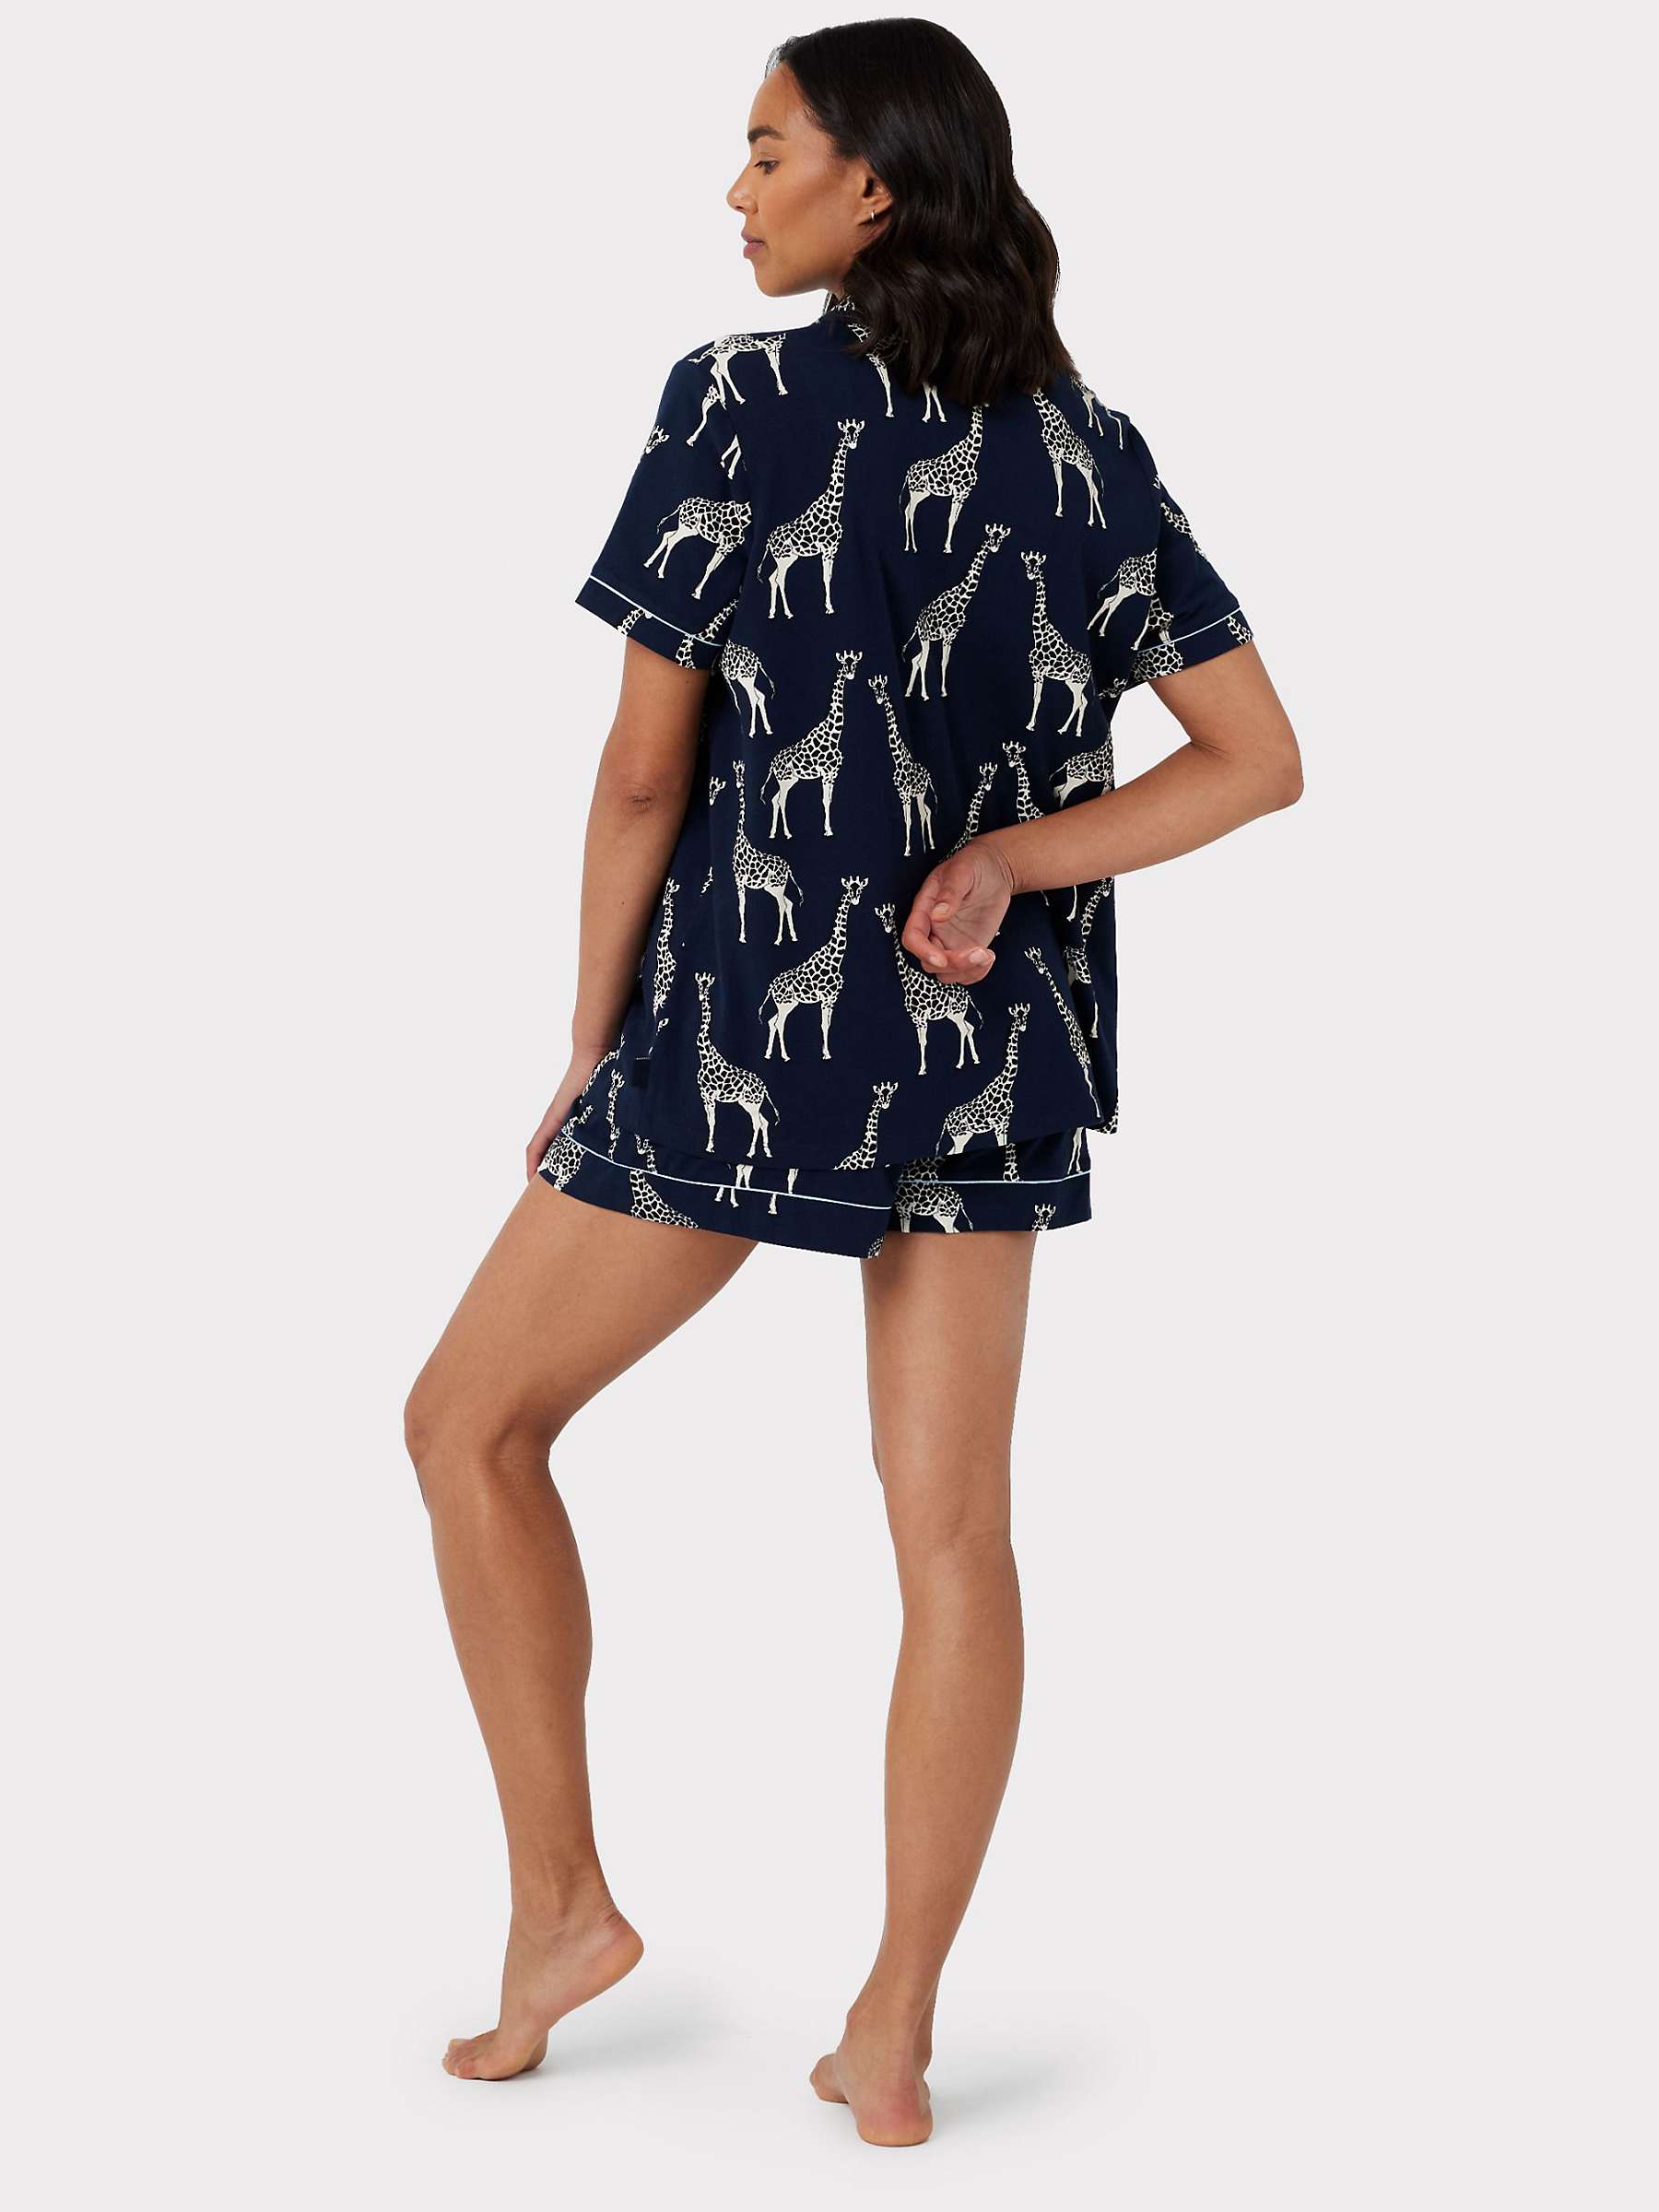 Buy Chelsea Peers Organic Cotton Blend Giraffe Print Shorts Maternity Pyjama Set, Navy Online at johnlewis.com